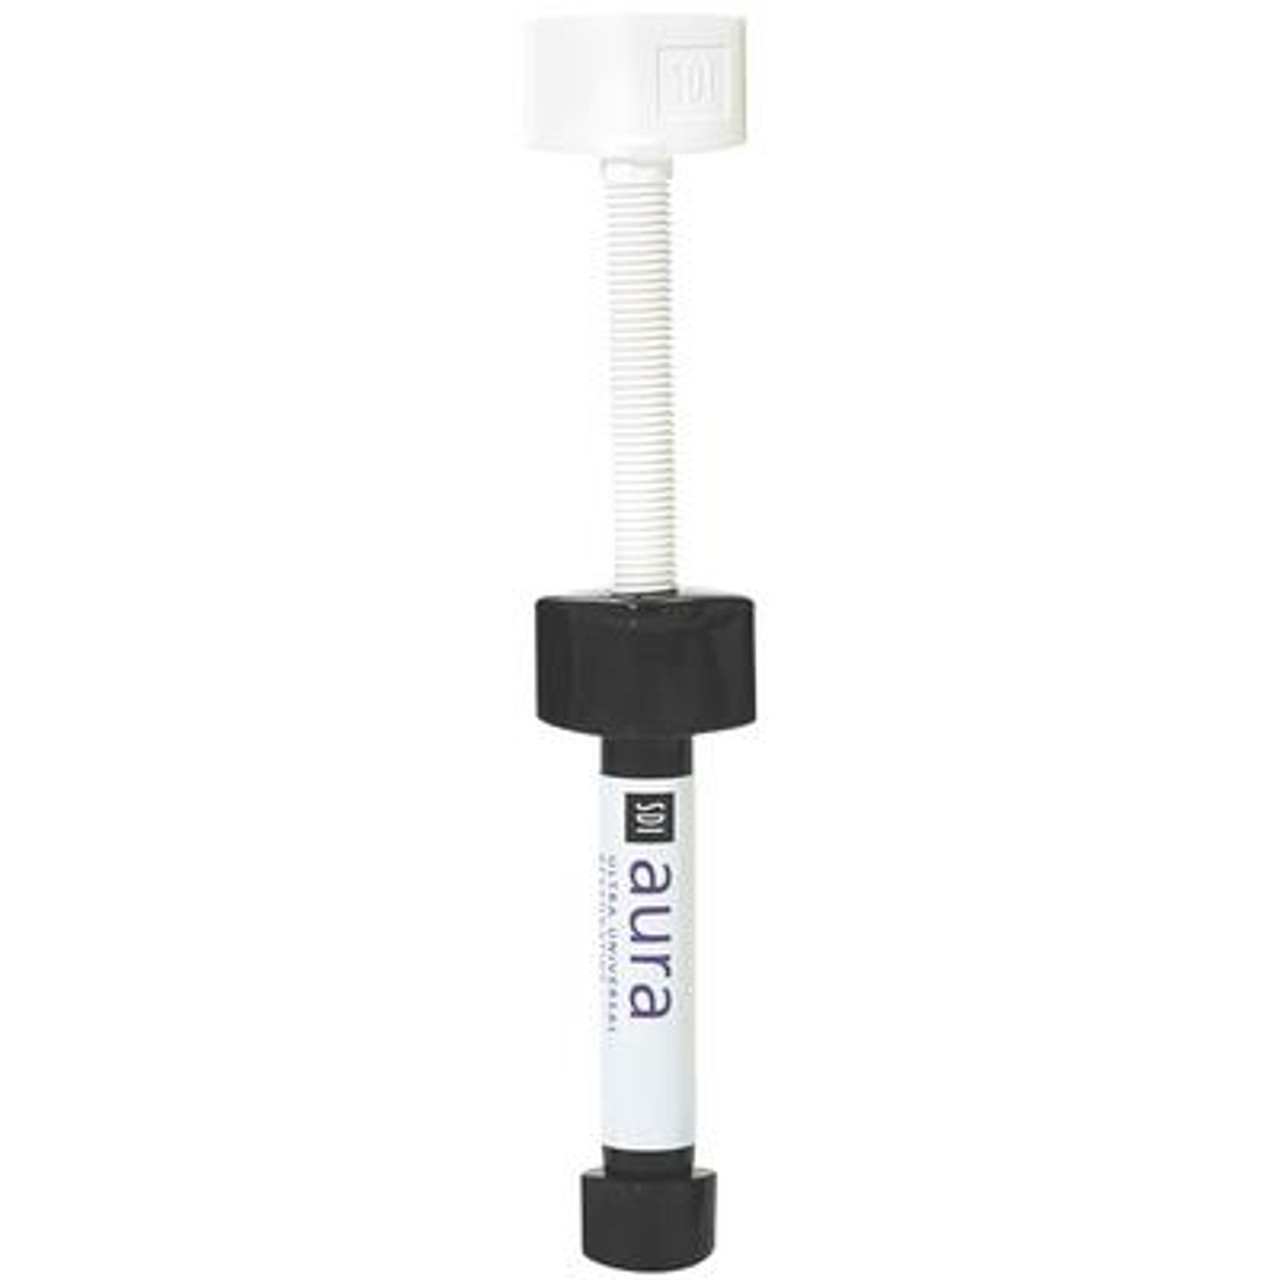 SDI Aura Nano-Hybrid All Purpose Composite, Syringe Refill 1 x 3g - E1 (Young or Bleached Teeth) 8560001